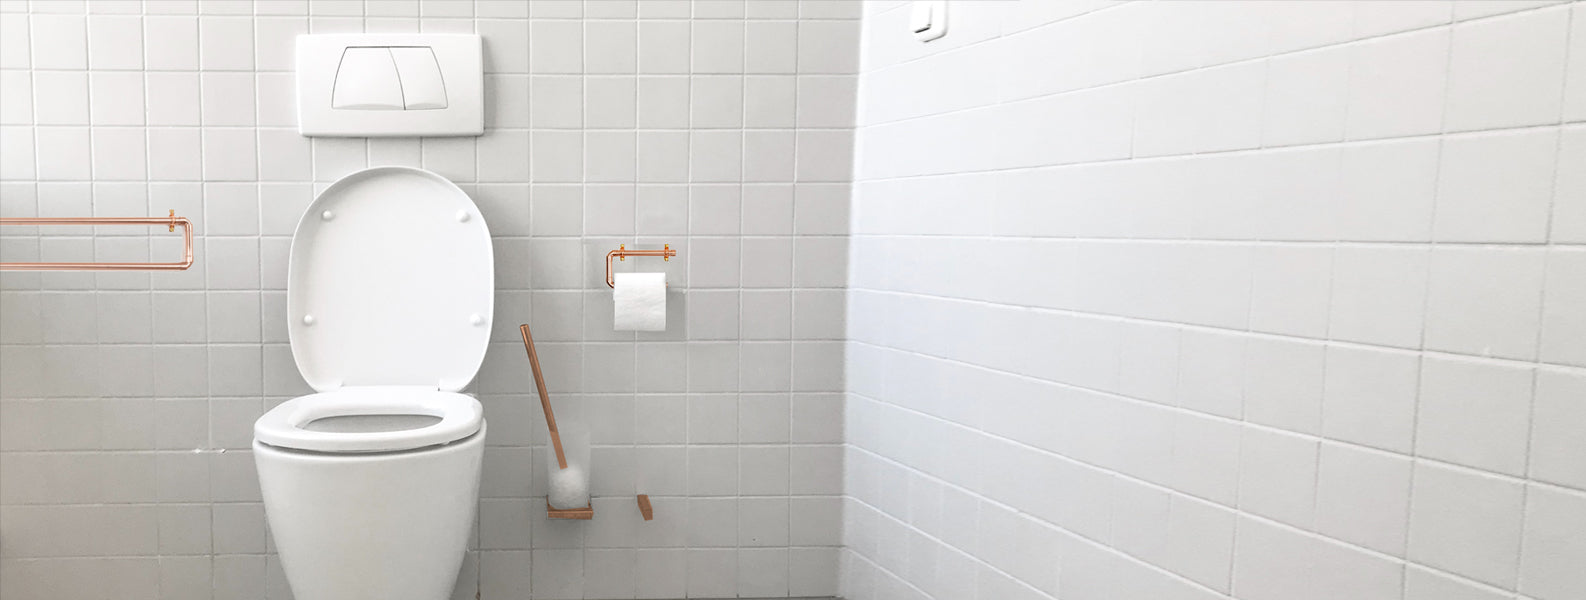 hospital toilet copper bathroom accessories